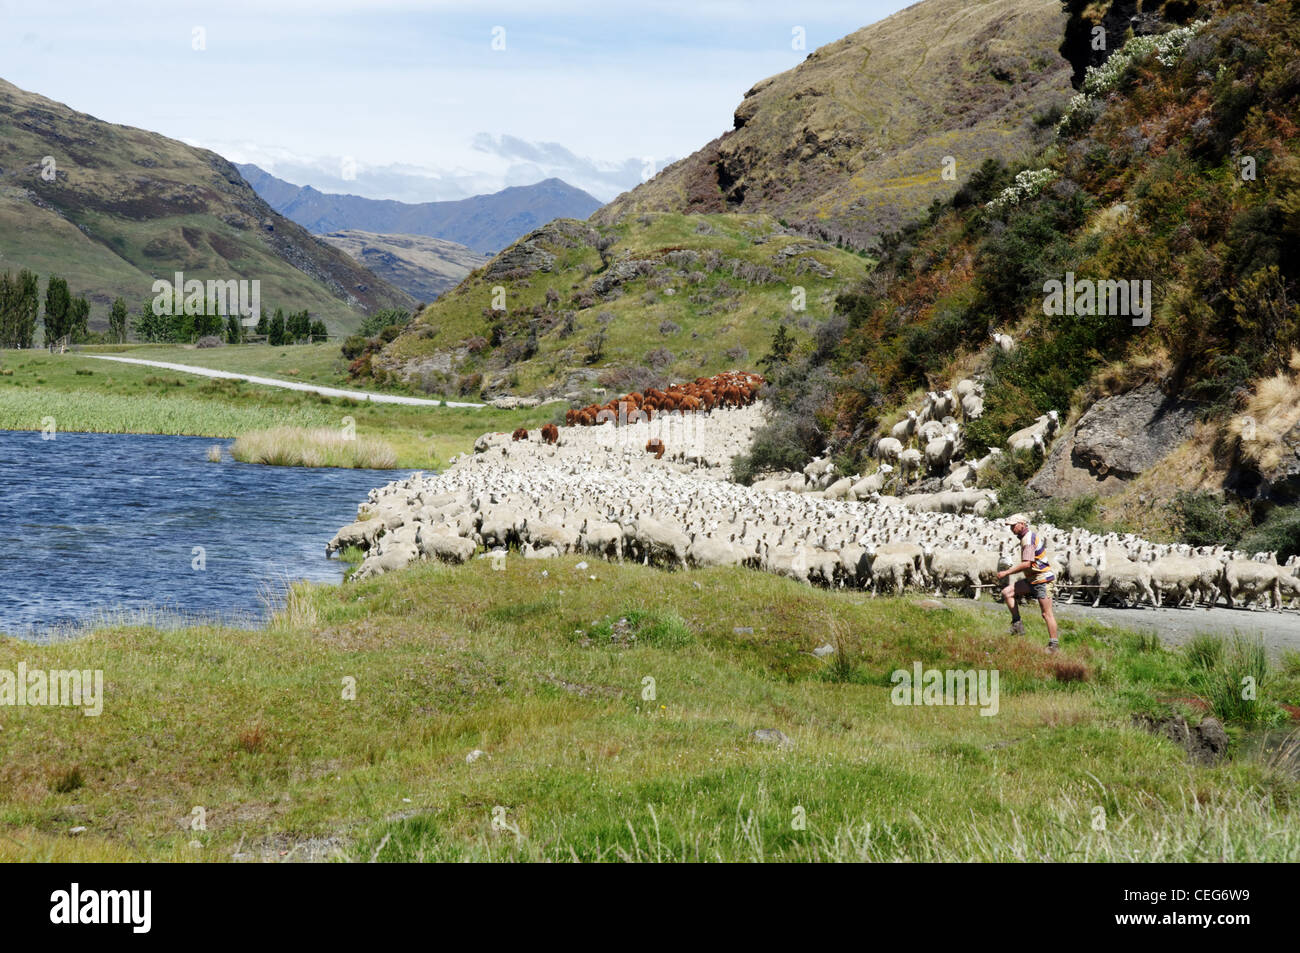 Sheep blocking the road in Mount Aspiring National Park, New Zealand Stock Photo